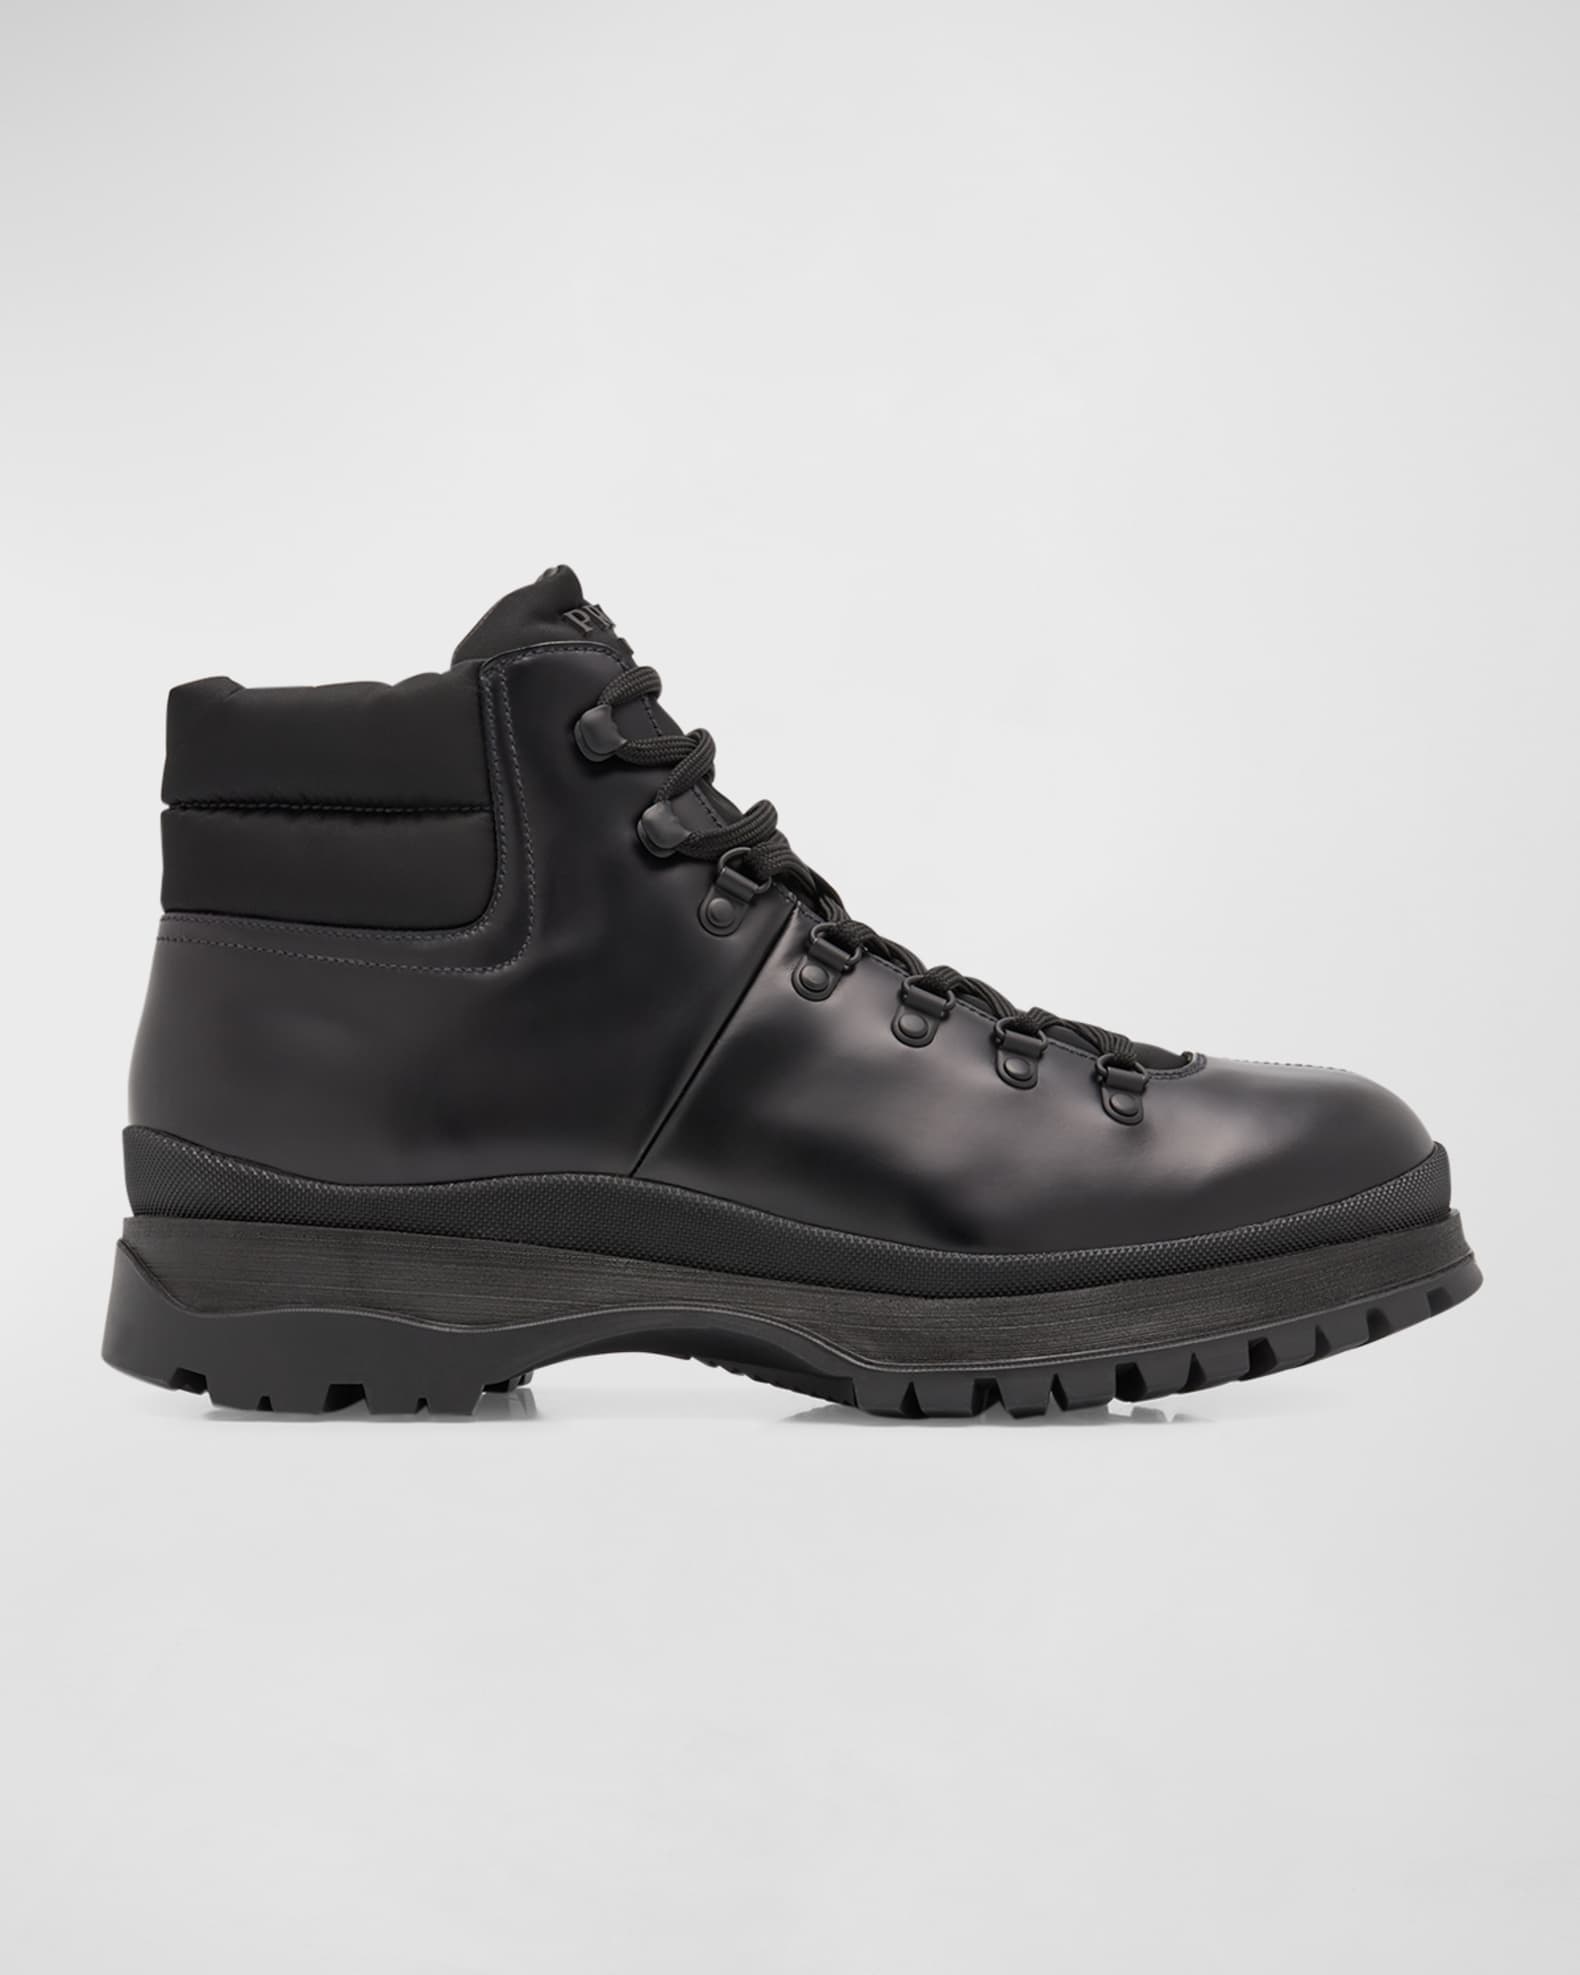 Prada Men's Brucciato Leather Lace-Up Hiking Boots | Neiman Marcus